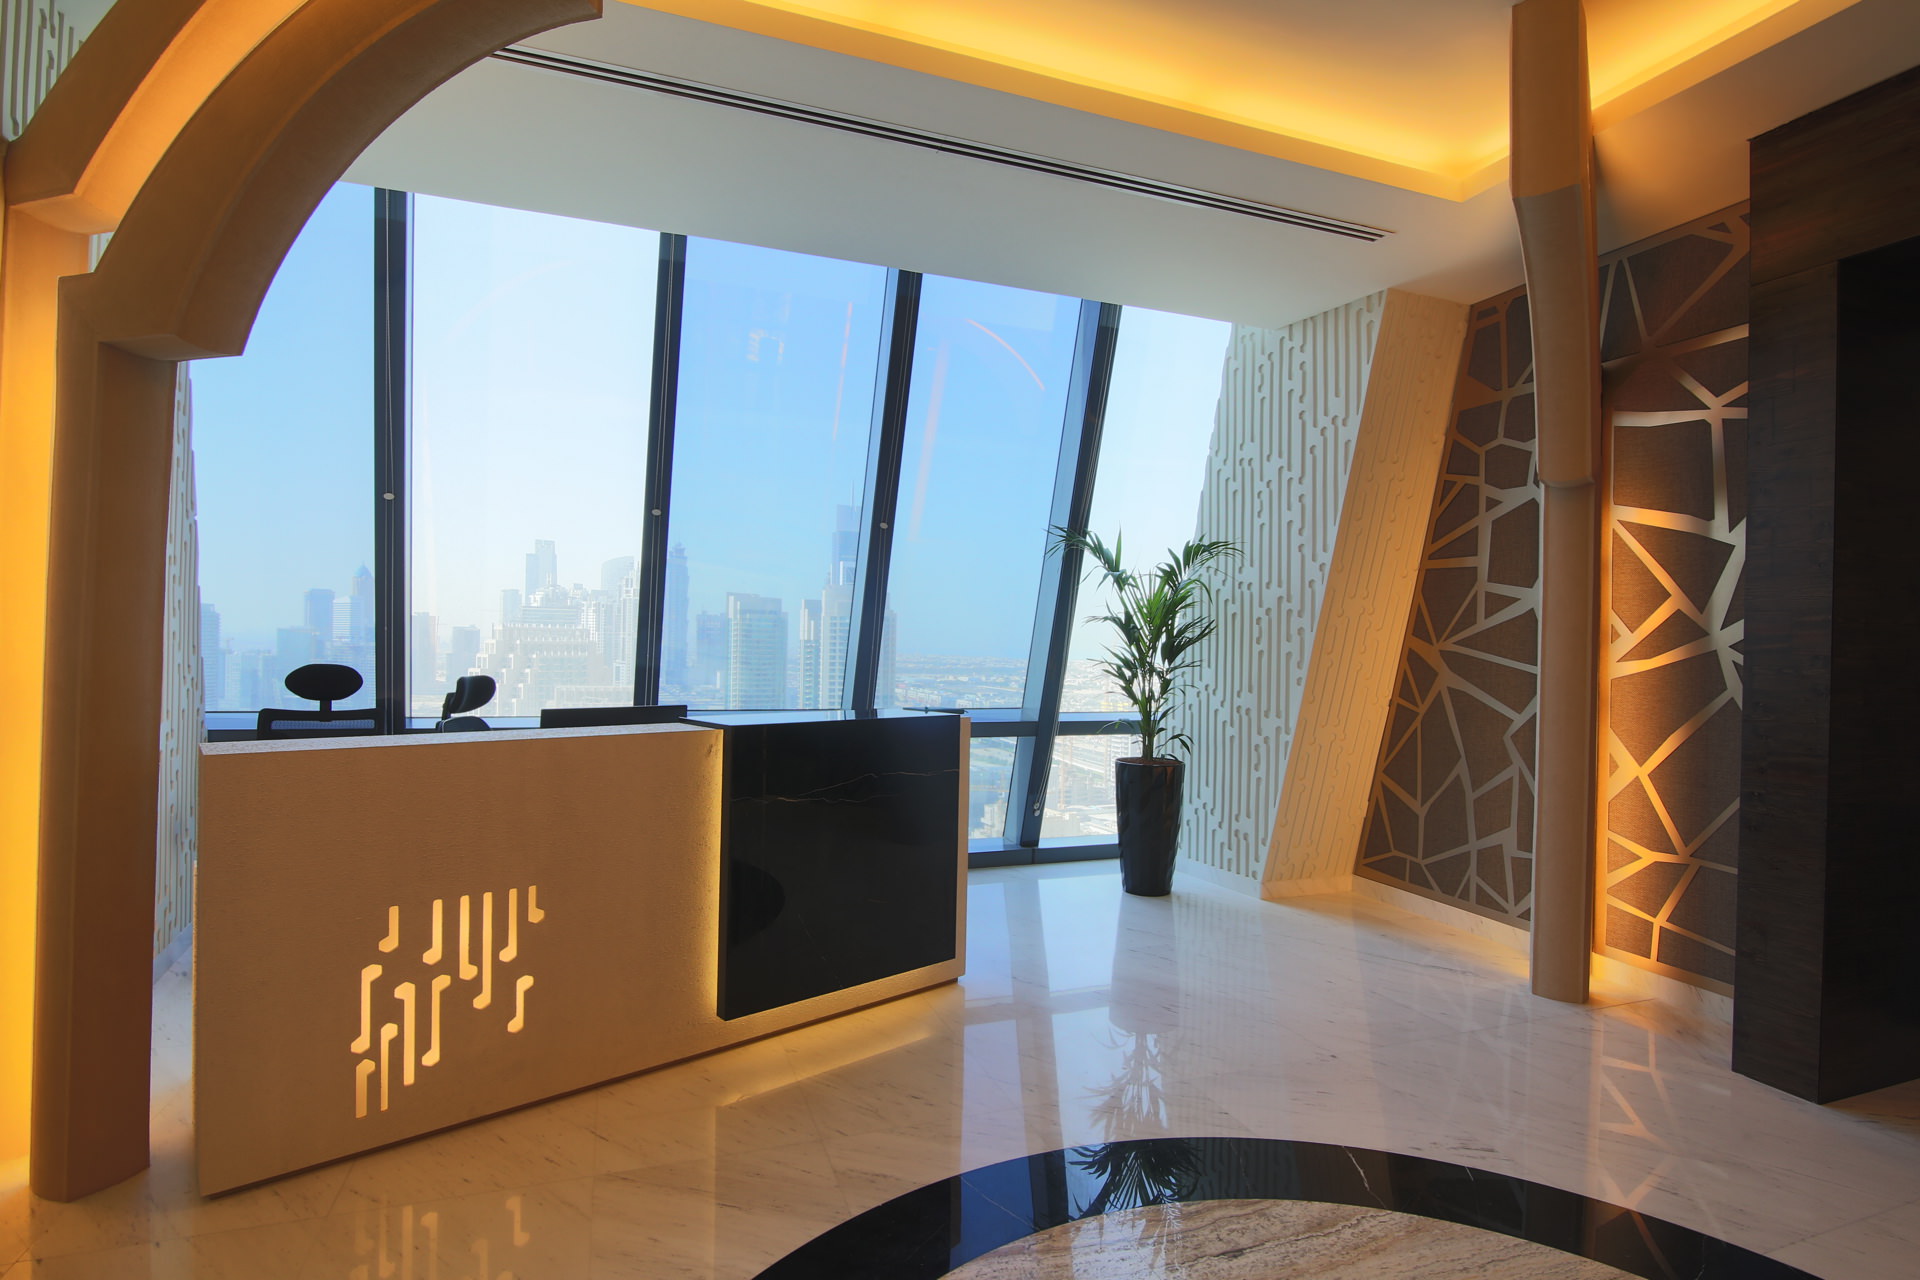 Greenstone Equity Office - Pink Line Interiors, Dubai.